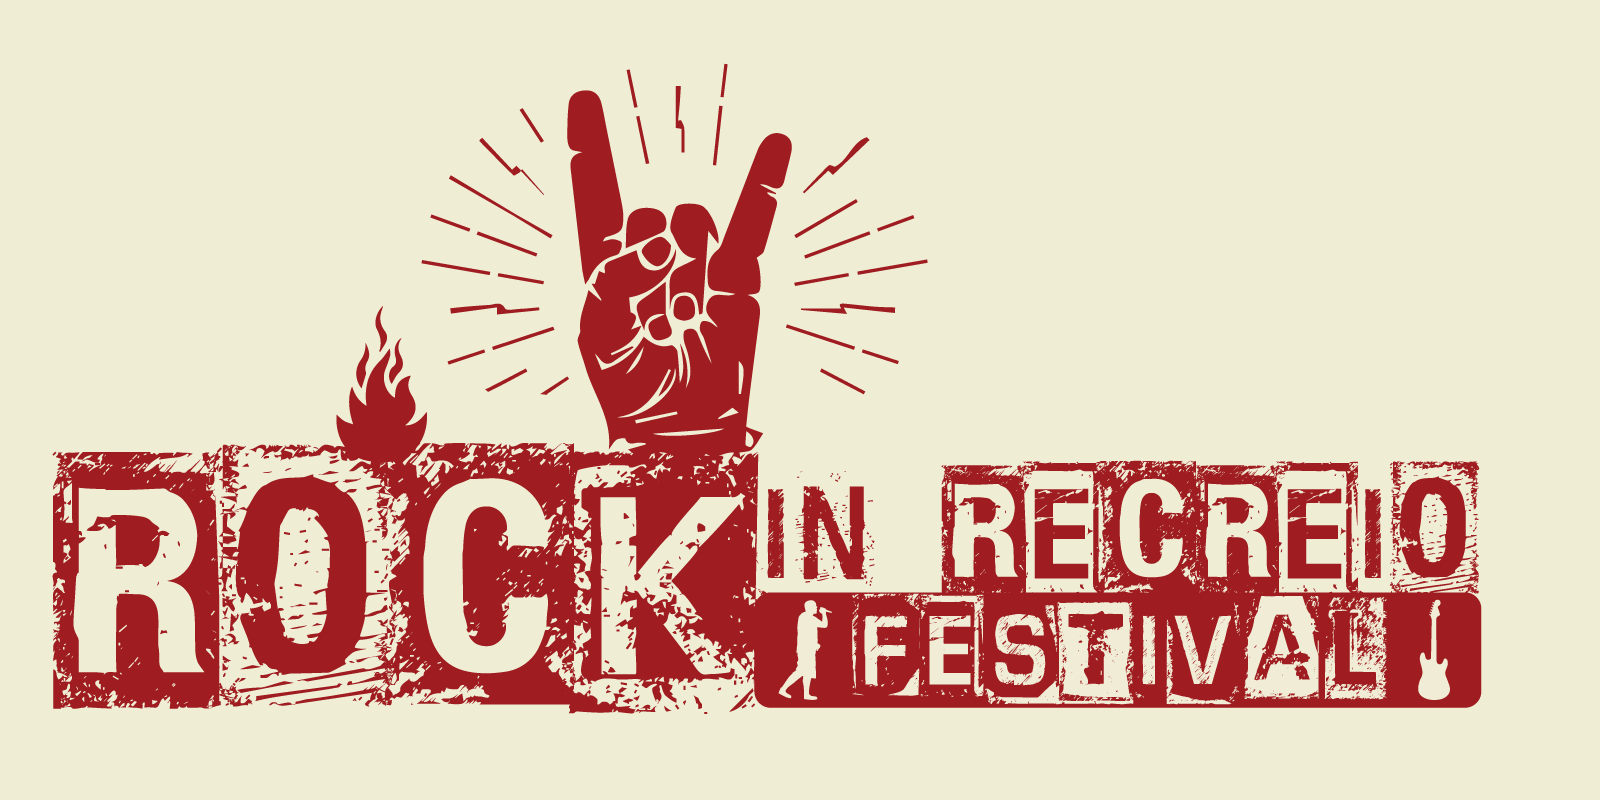 Featured image for “Rock in Recreio”